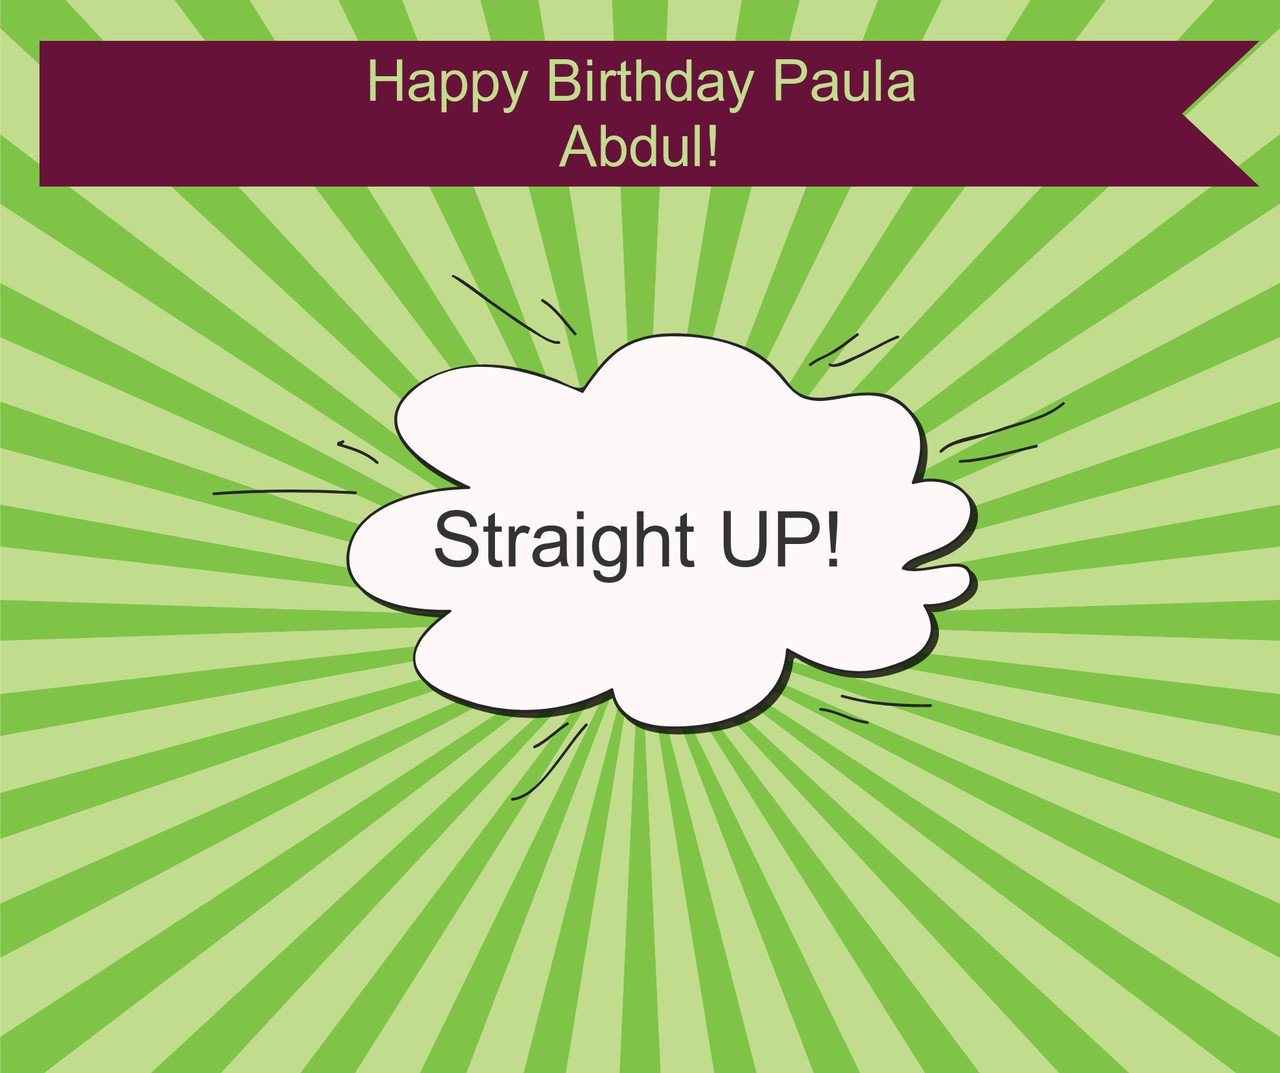 Happy Birthday Paula Abdul!  